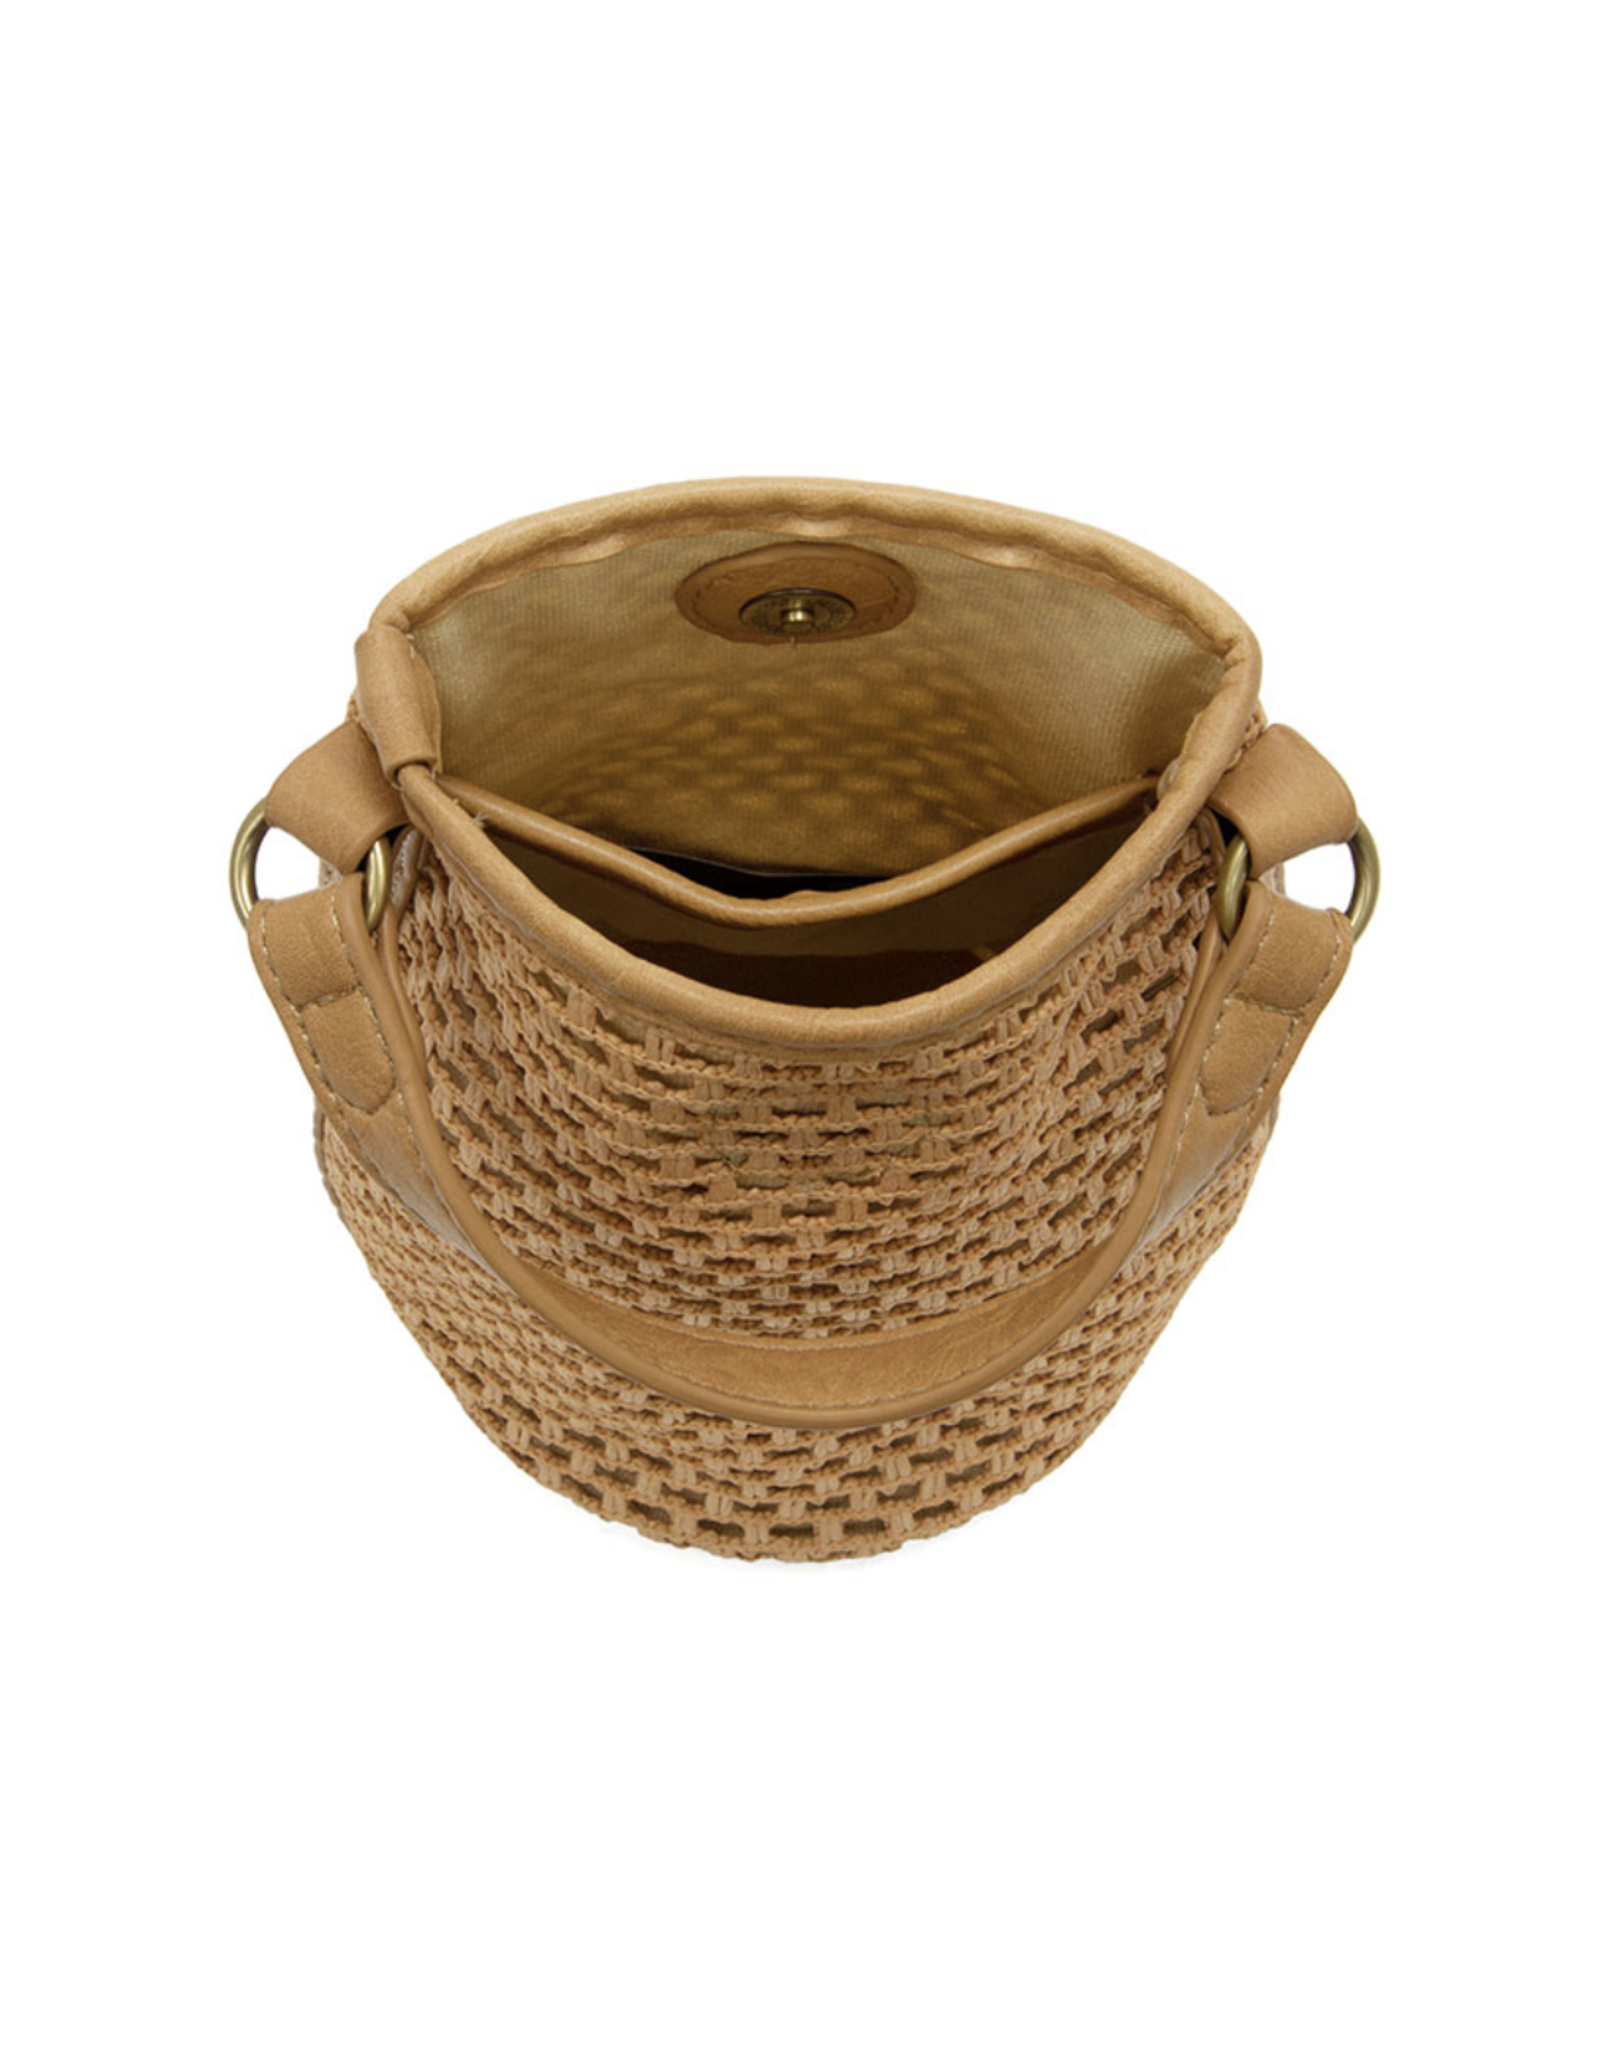 Kaia Open Weave Bucket Crossbody Bag - Natural